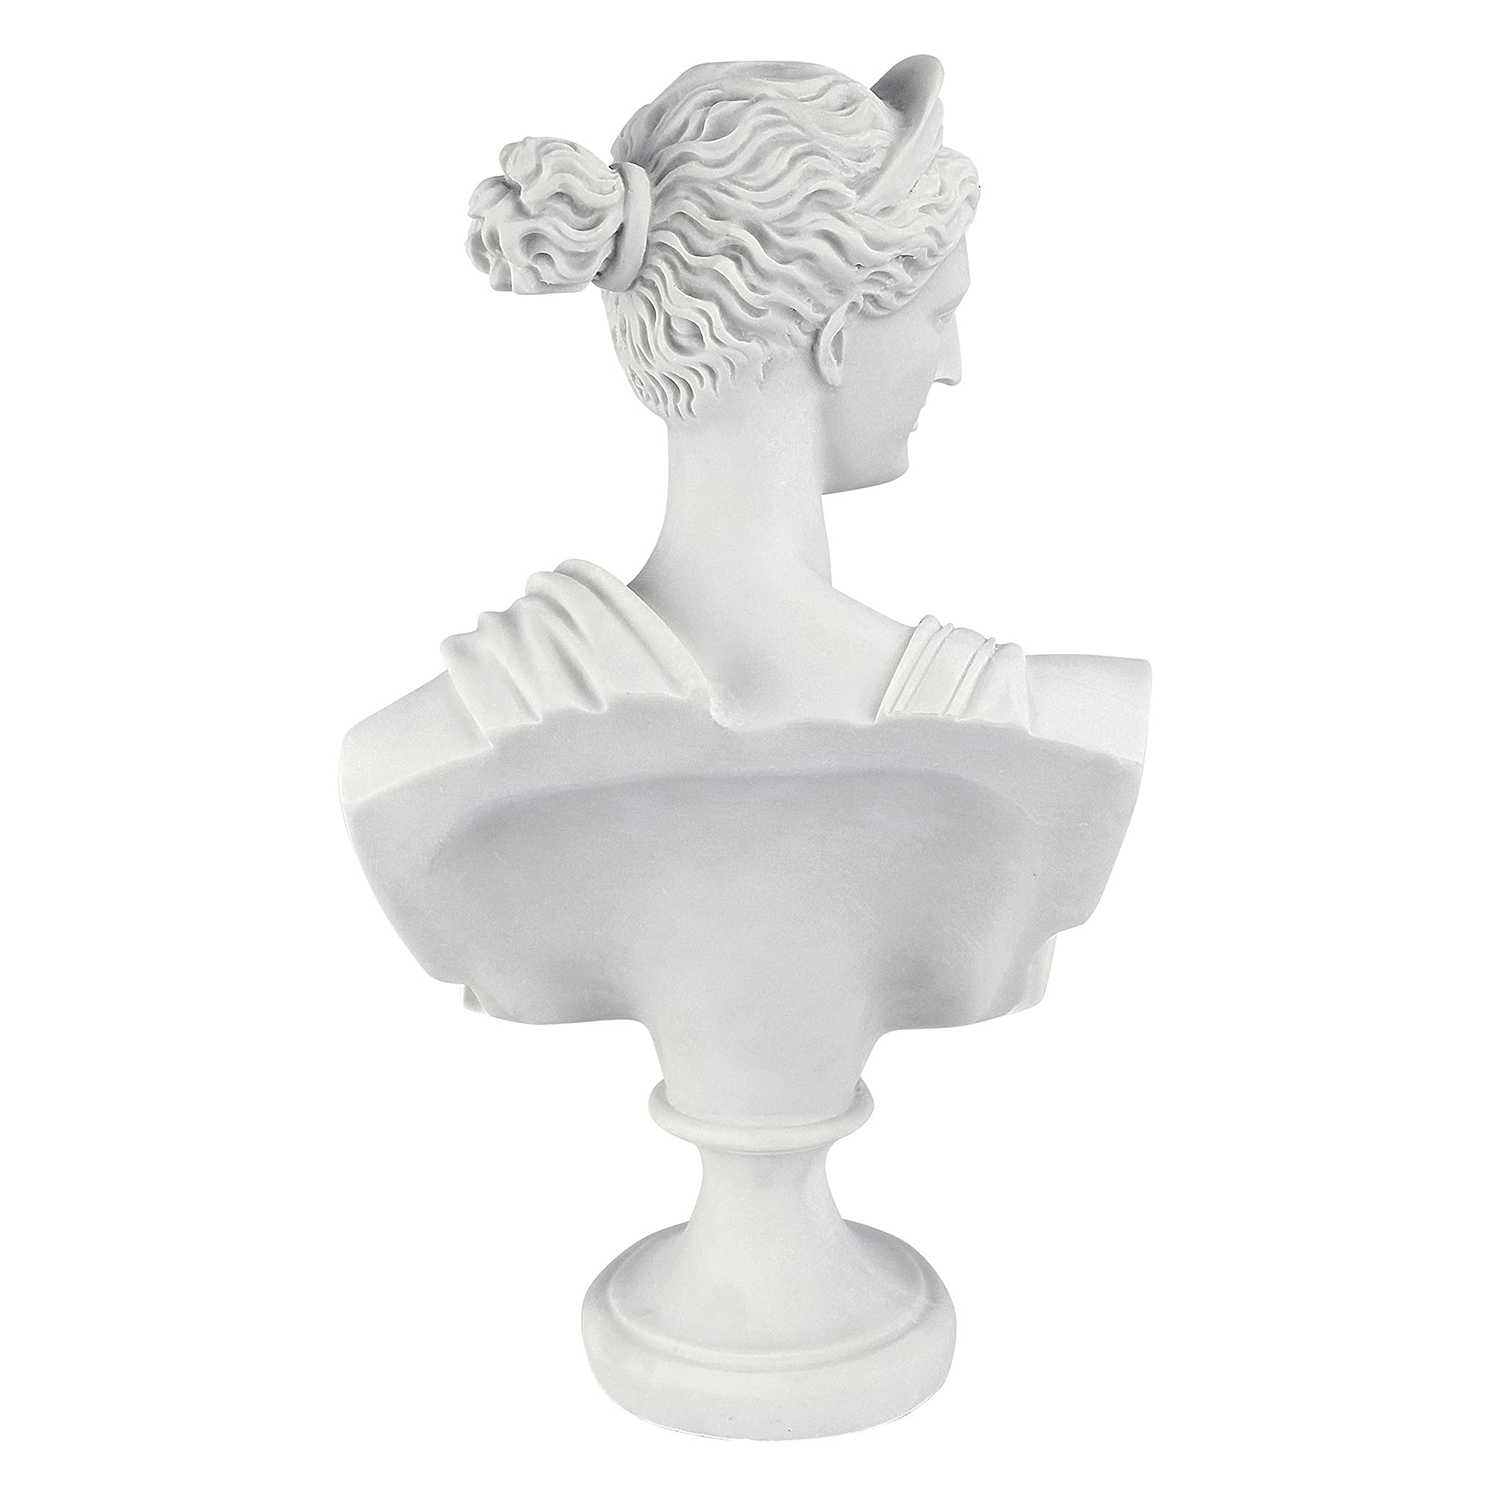 Artemis Bust Sculpture